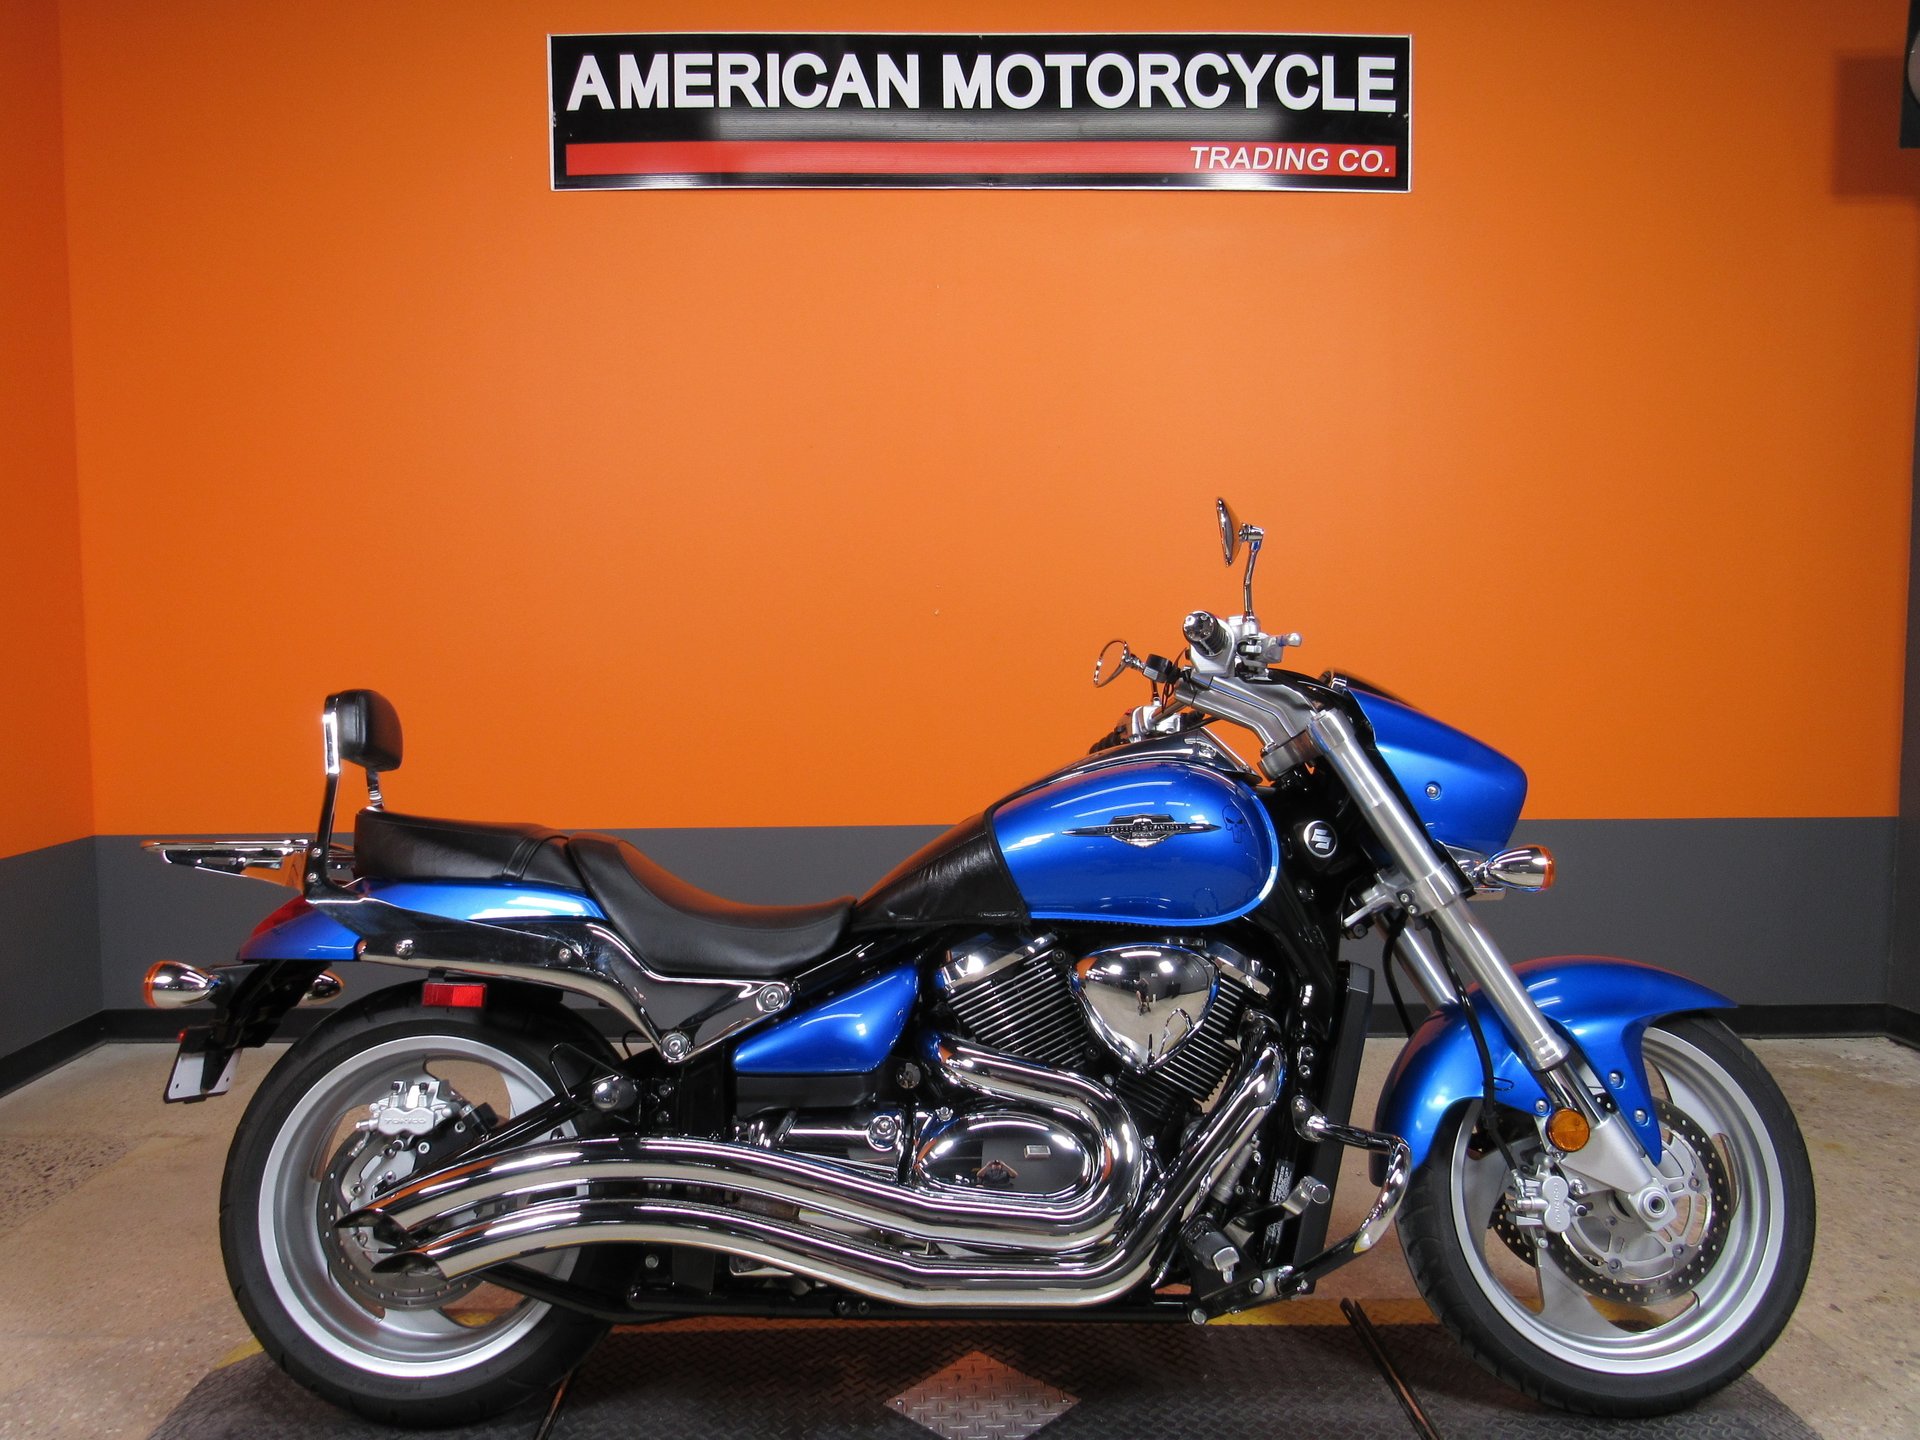 2009 Suzuki Boulevard | American Motorcycle Trading Company - Used ...